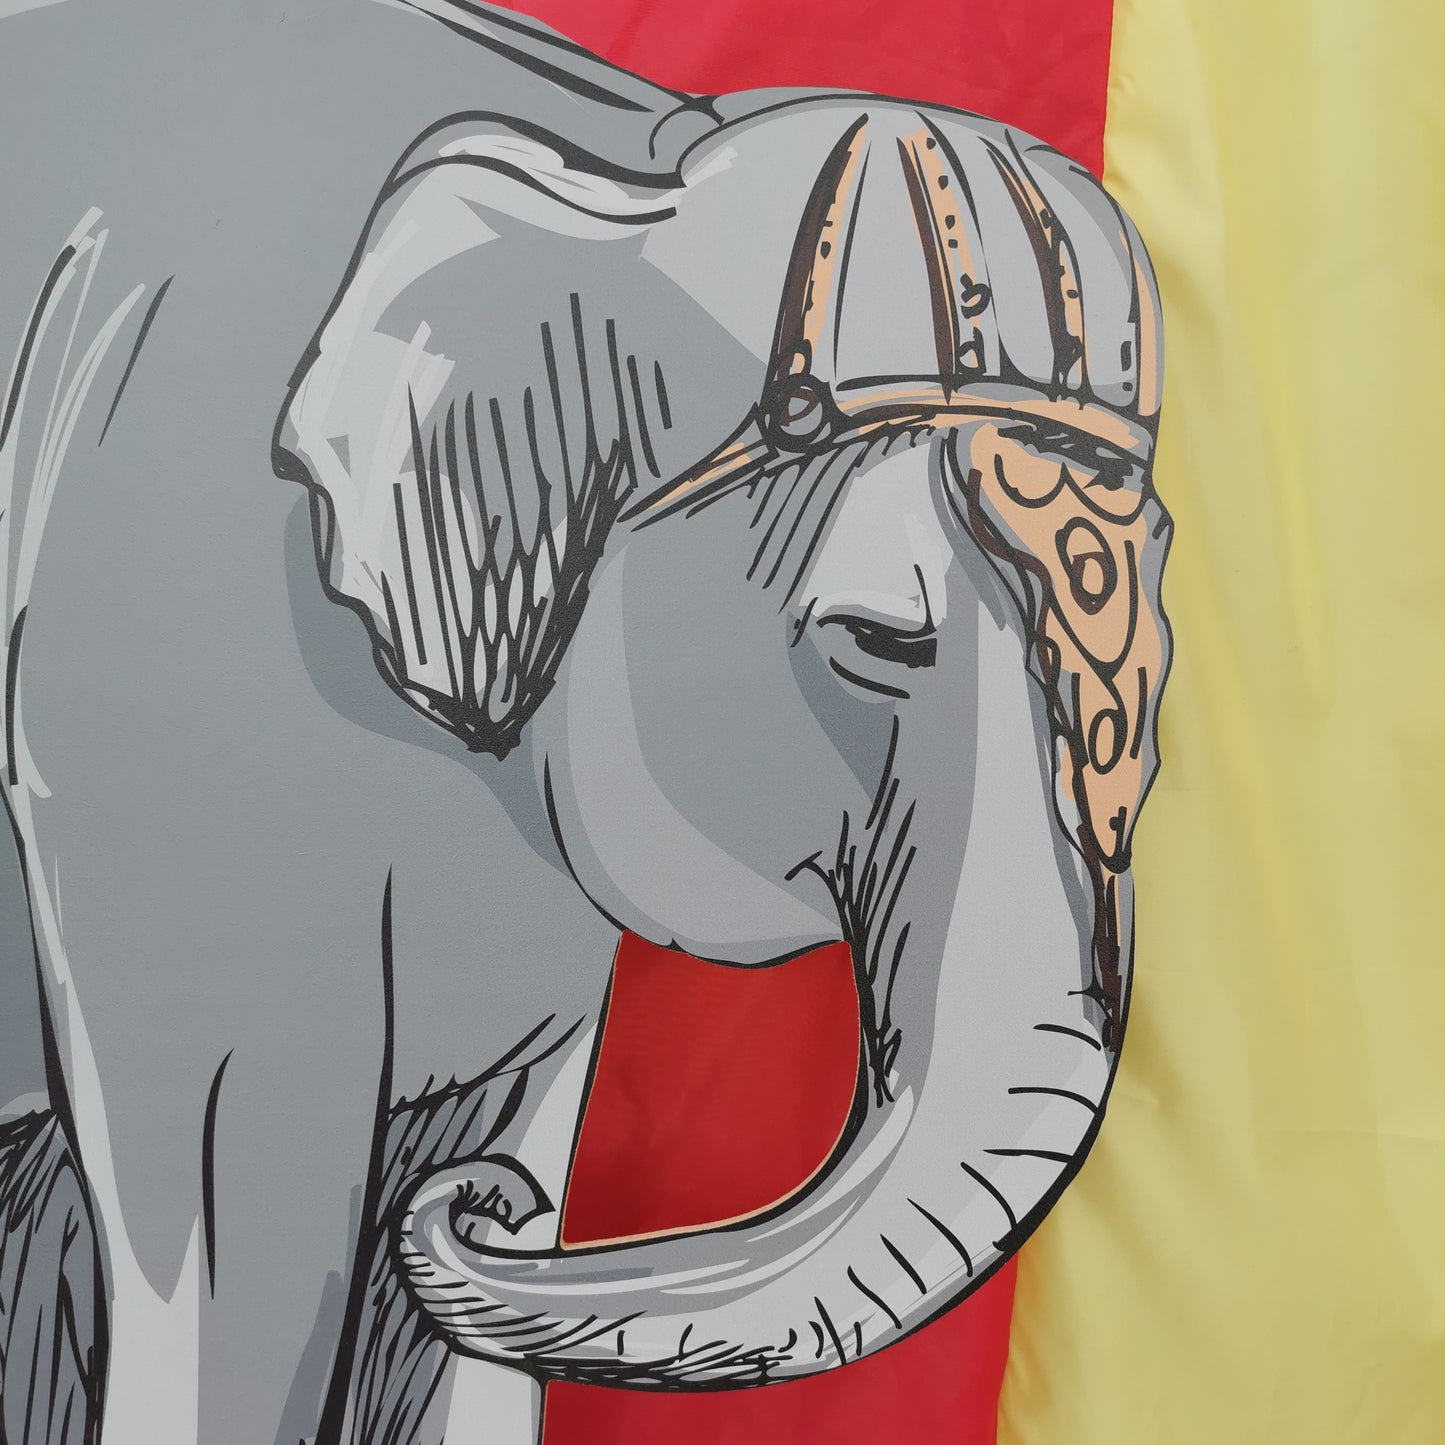 Wooden Circus Elephant Cutout